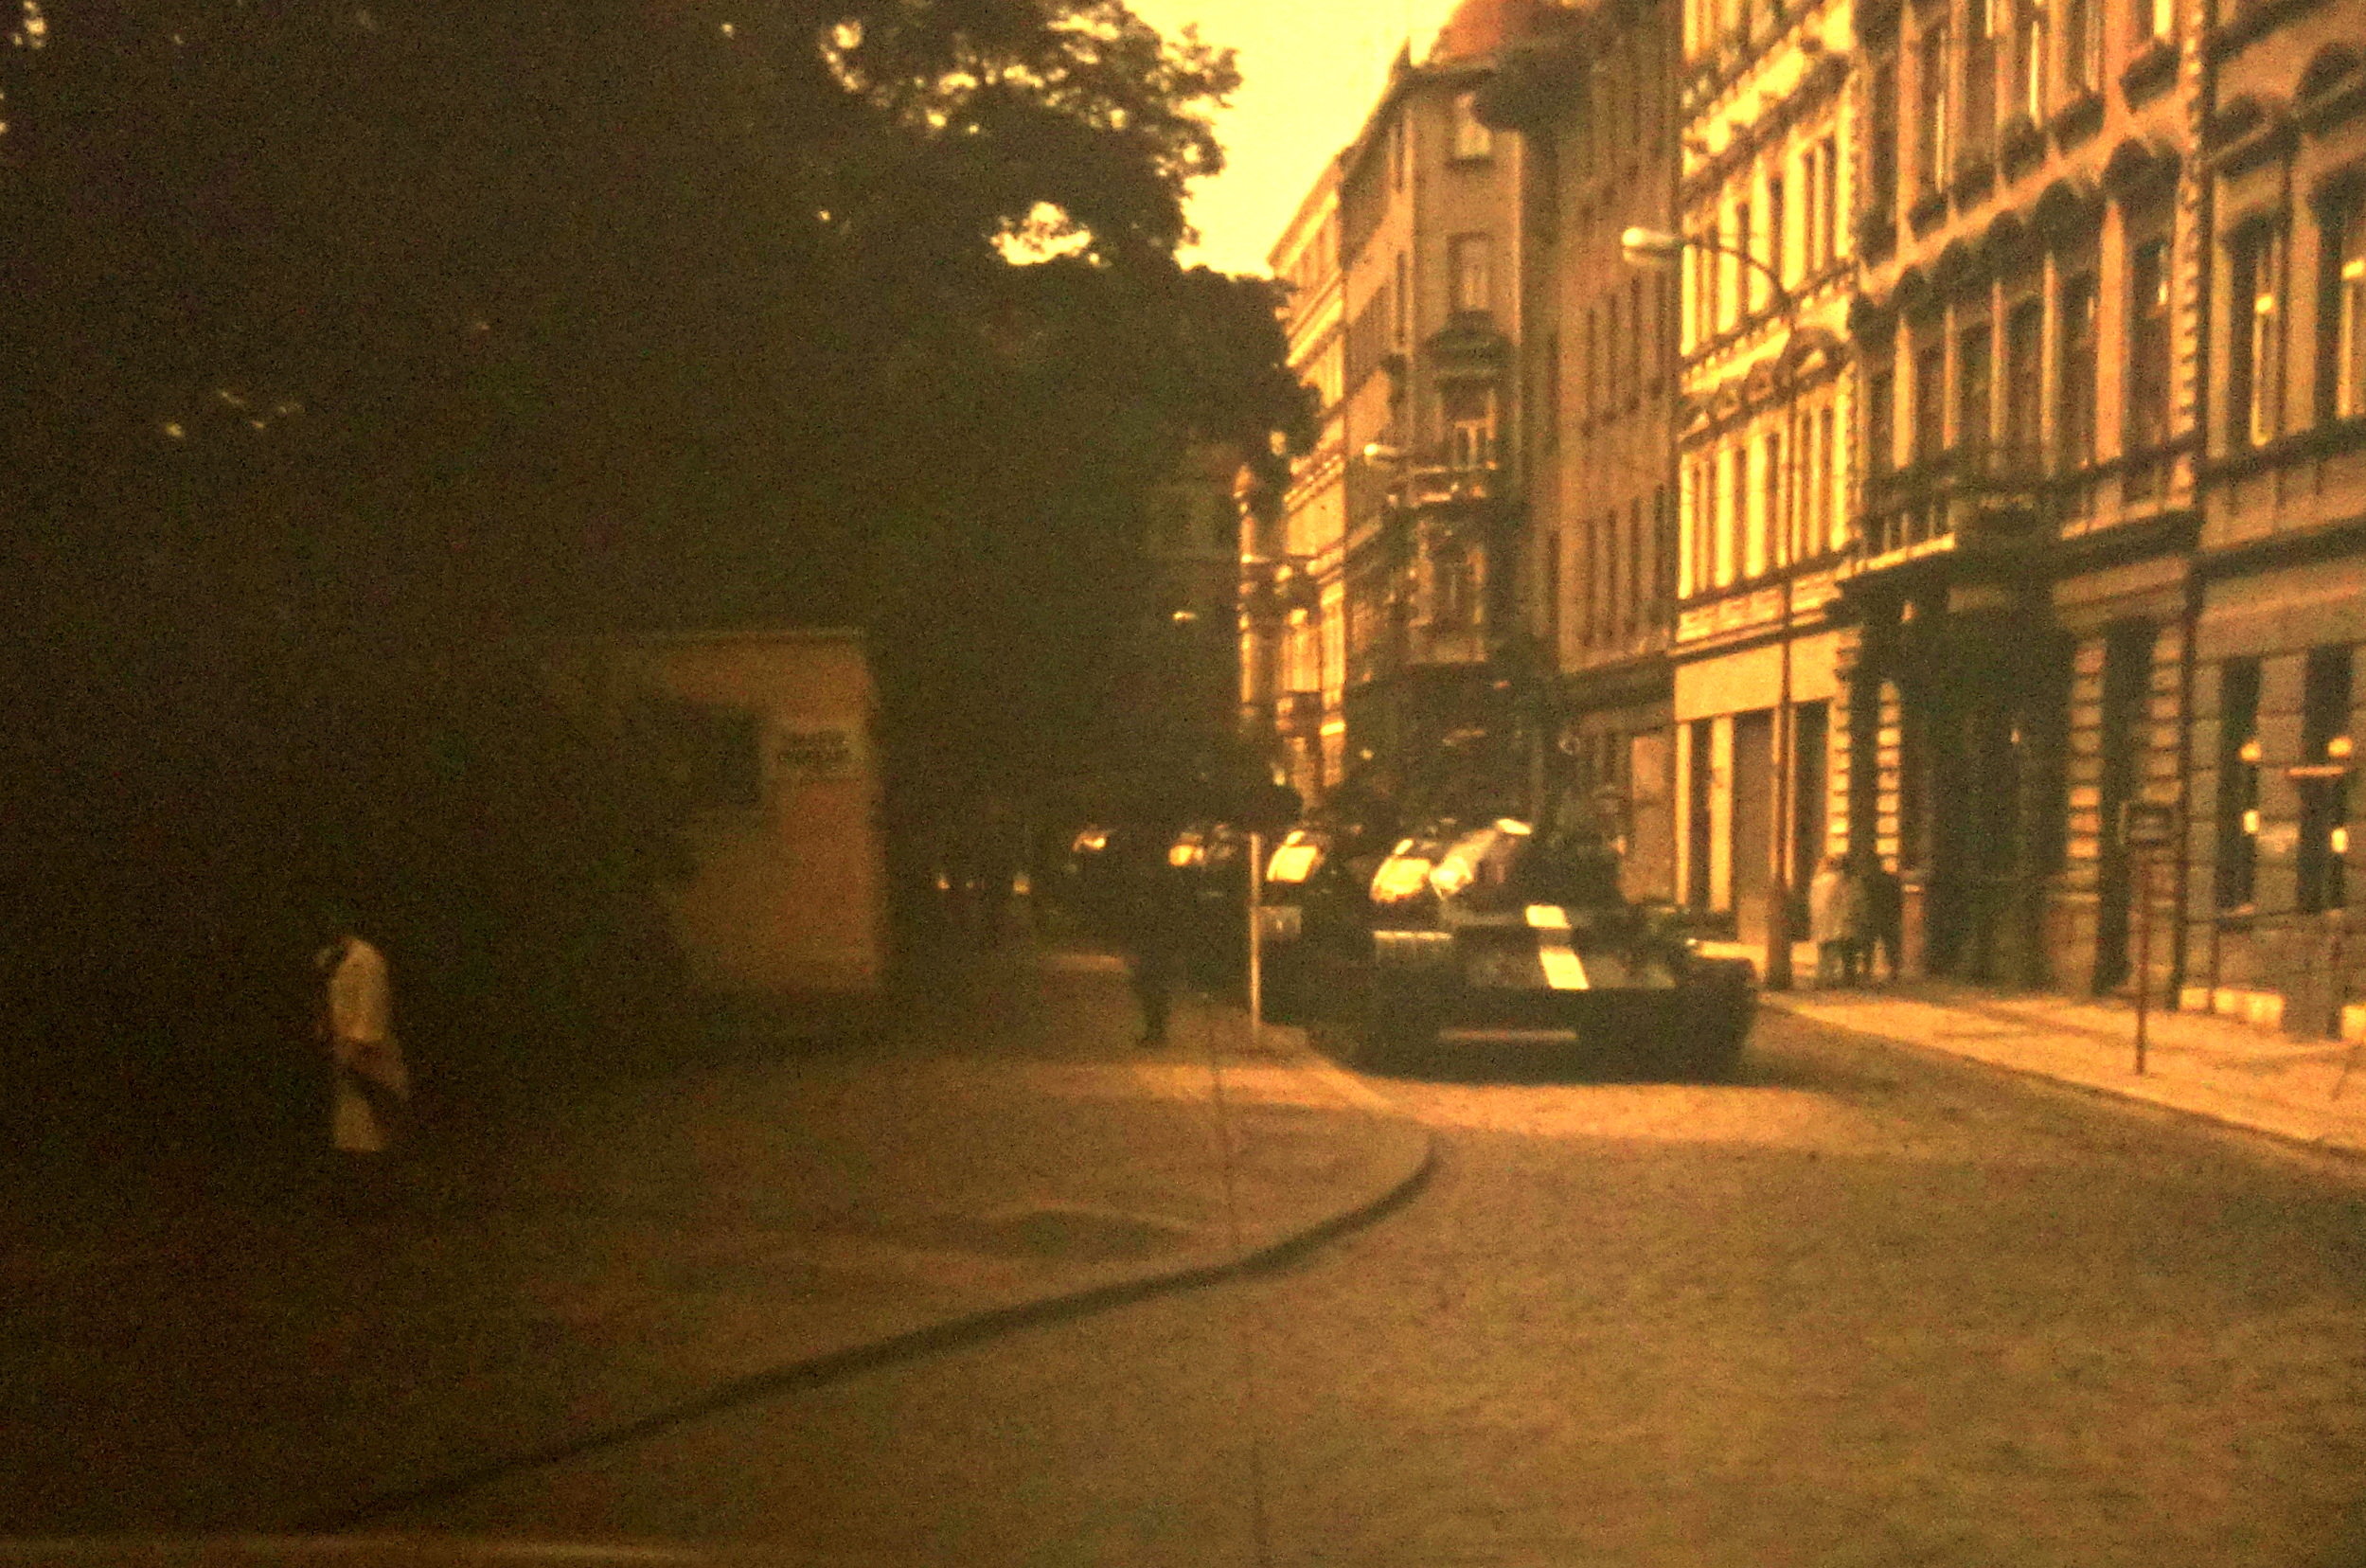 centrum Prahy srpen 1968, ulice zablokovaná ruskými tanky